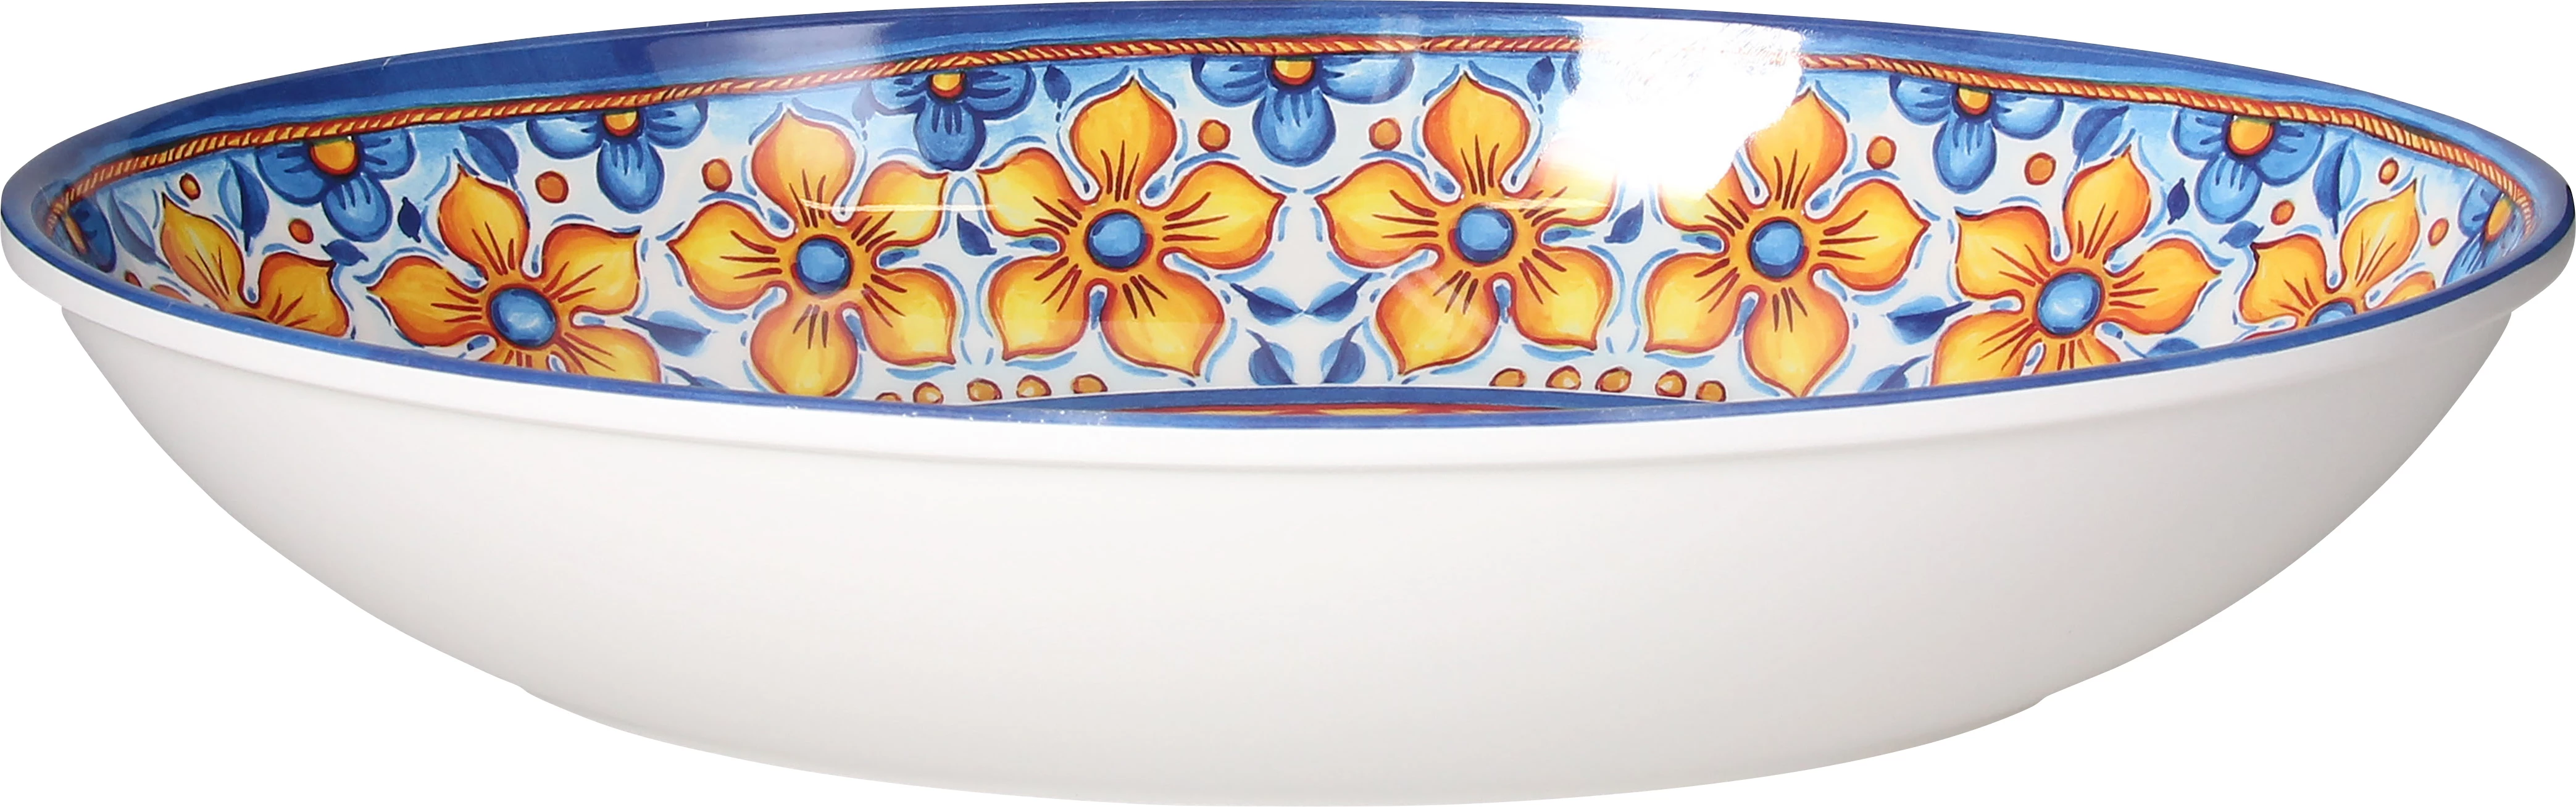 Tognana Narciso Cefalu skål, oval, blå/orange, 320 cl, 40 x 25 cm